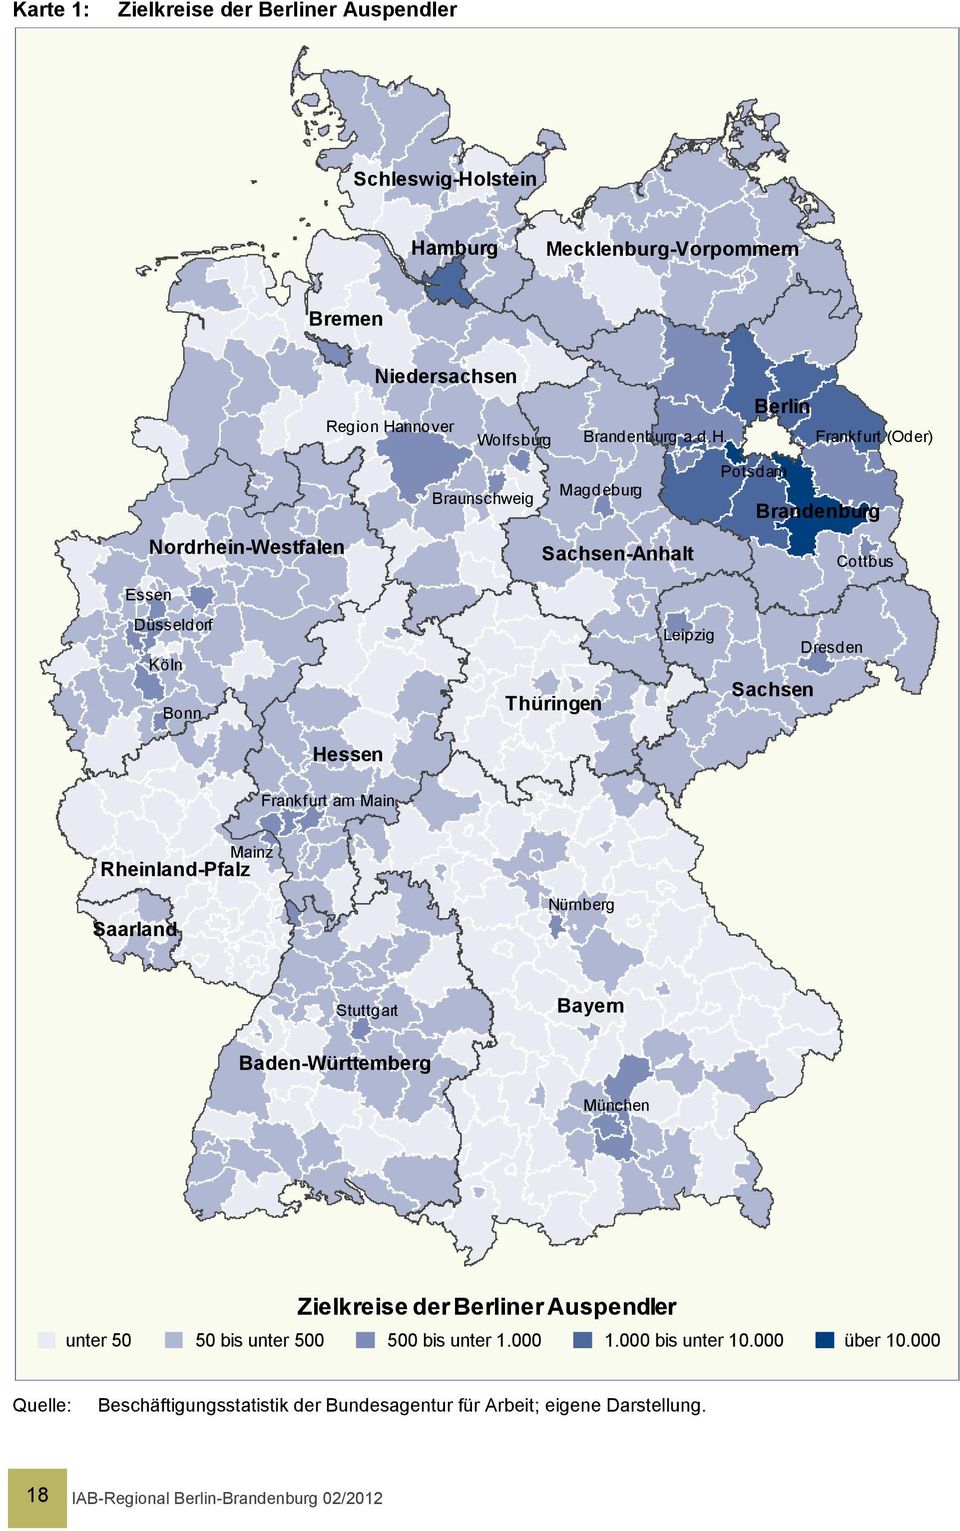 en Berlin Region Hannover Wolfsburg Brandenburg a.d.h.